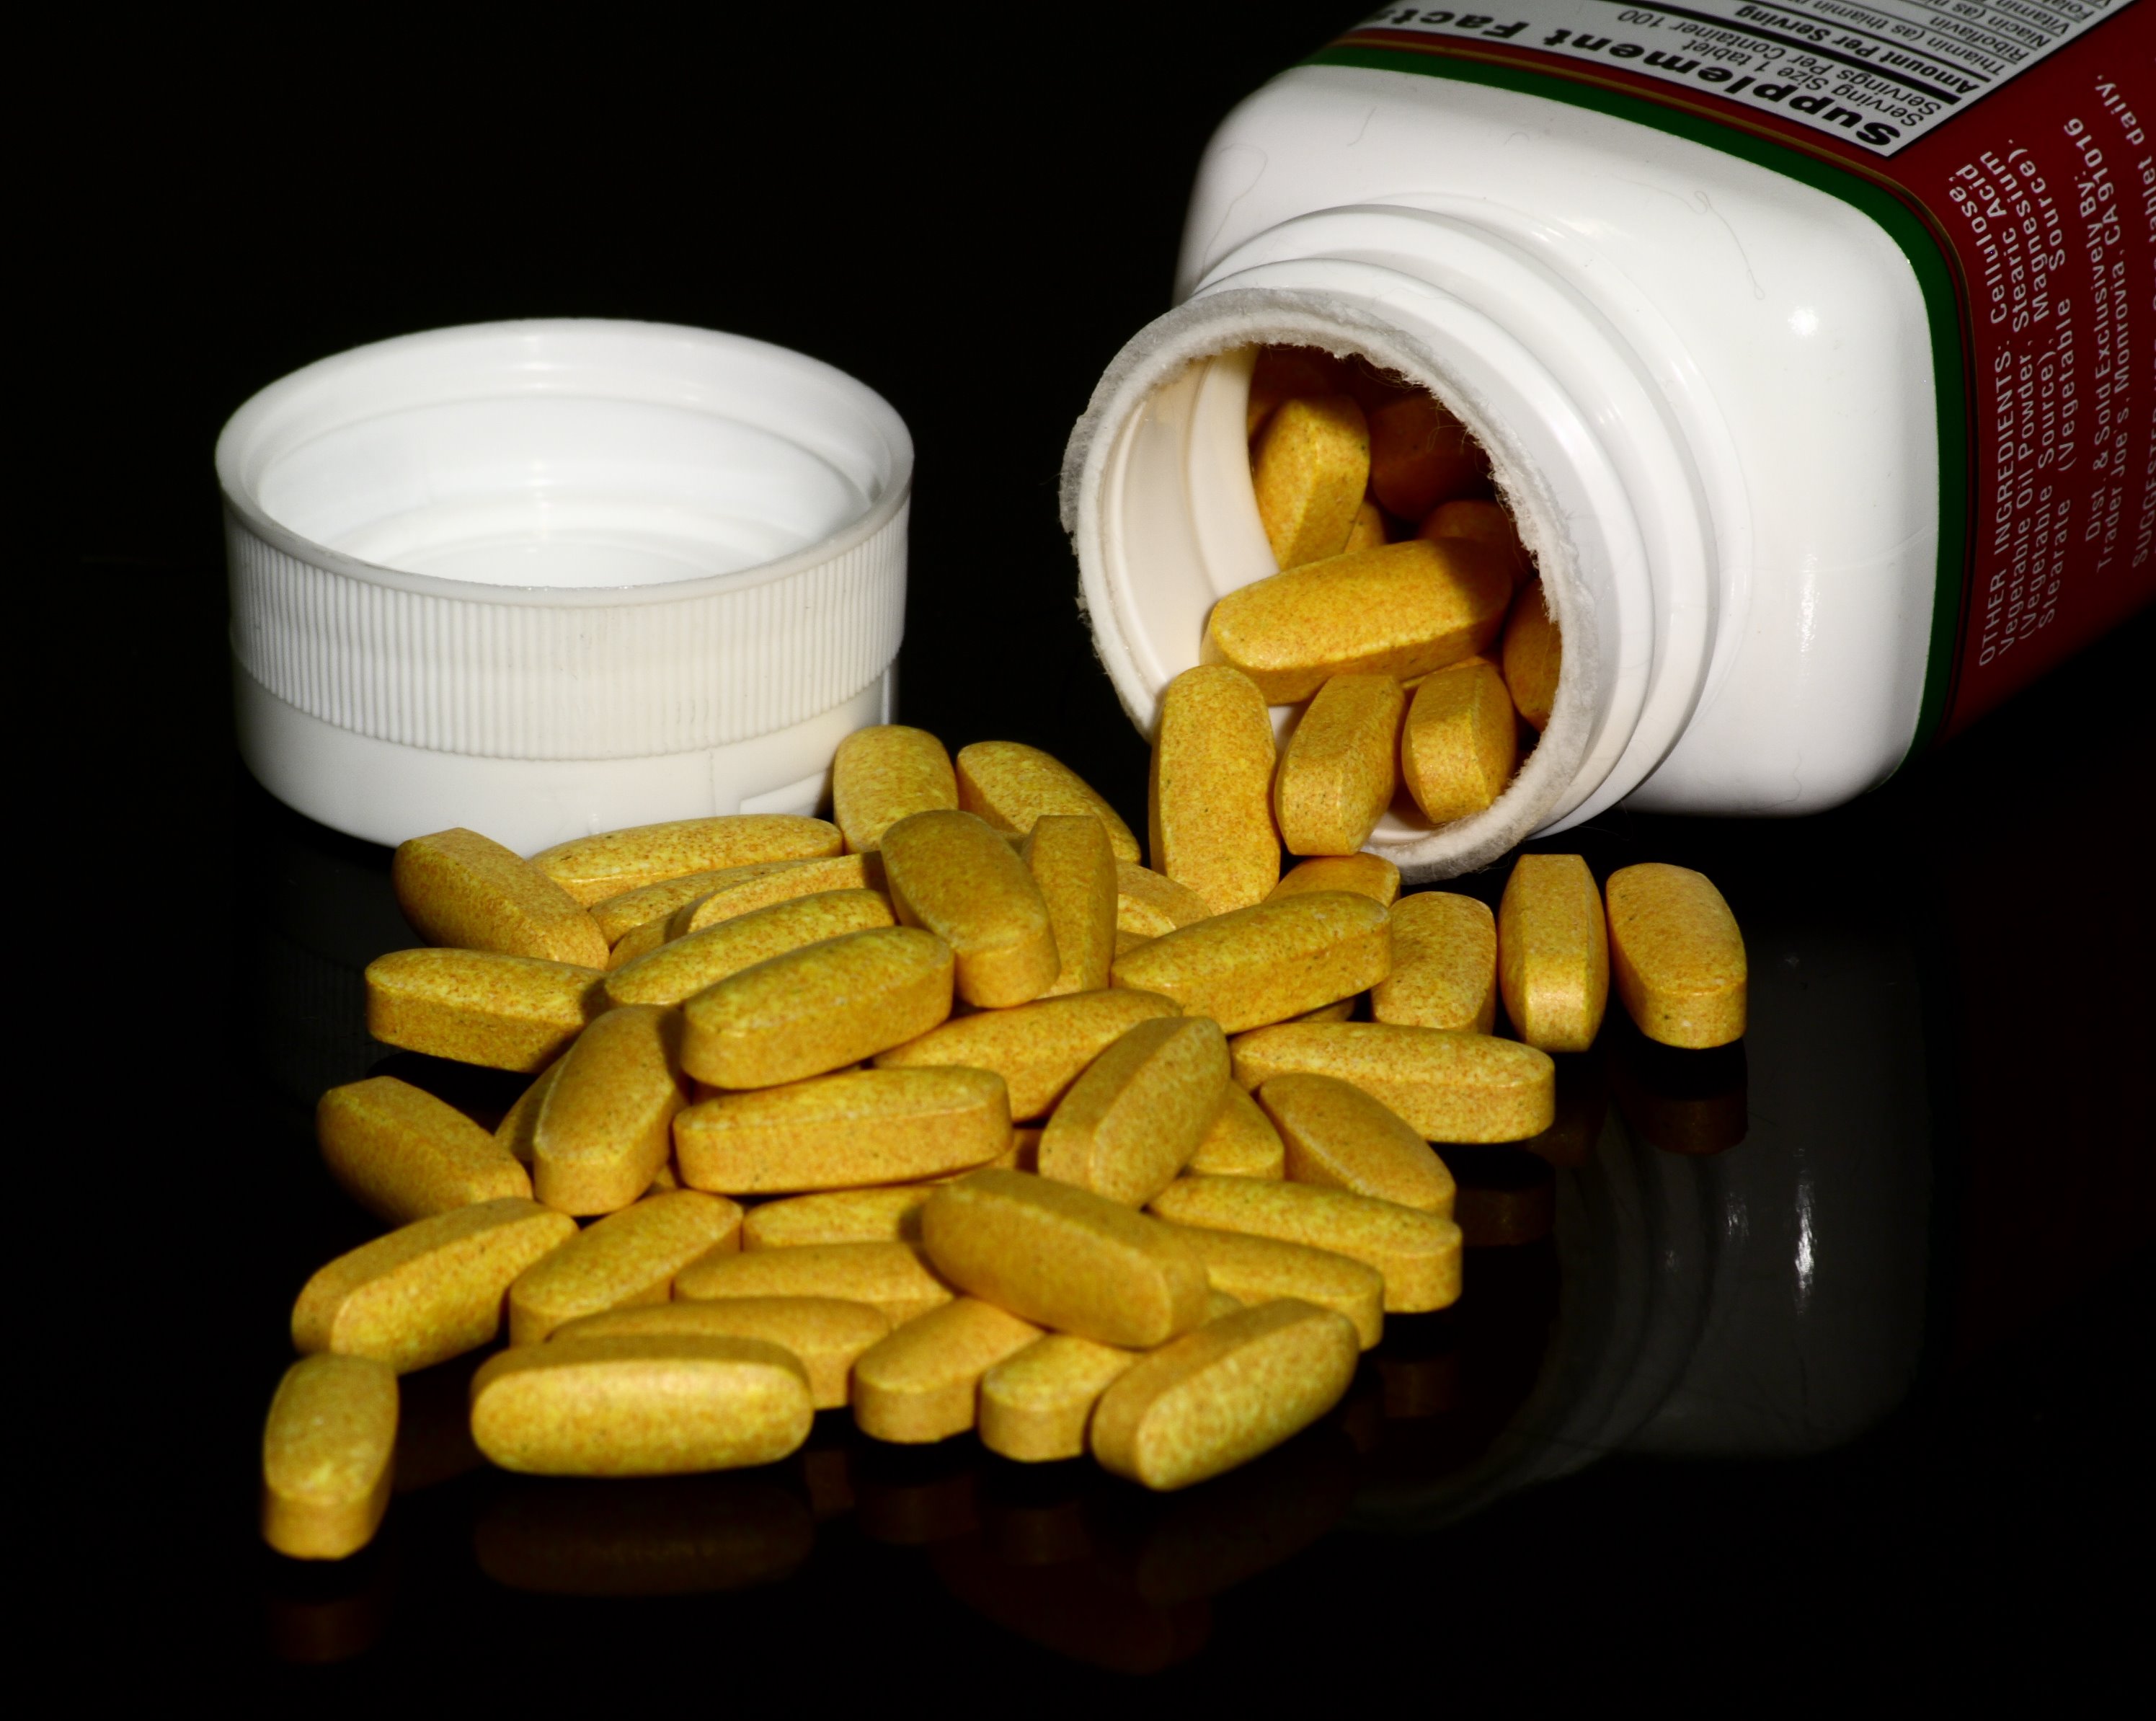 Vitamin pills without prescription detrimental to health